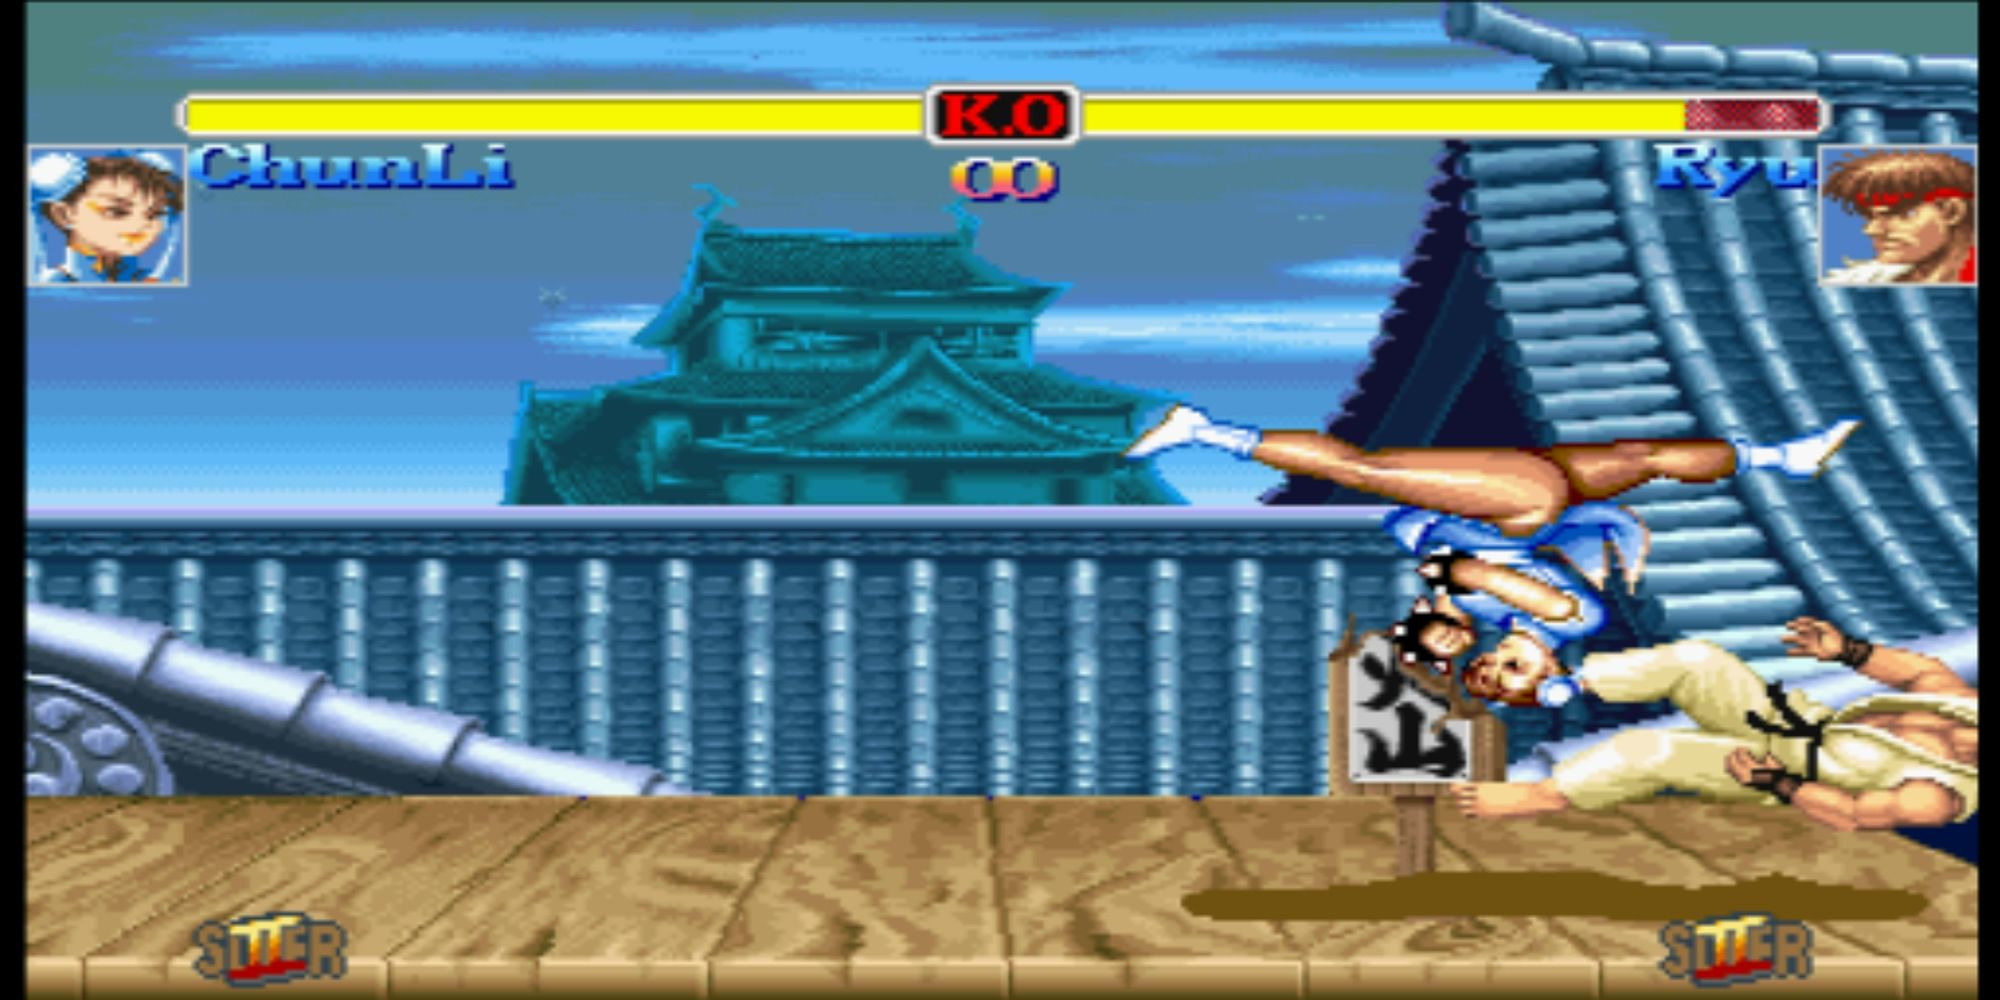 Super SF2 Chun-li hits Ryu with a Spinning Bird Kick at Suzaku Castle in Hyper Street Fighter 2.